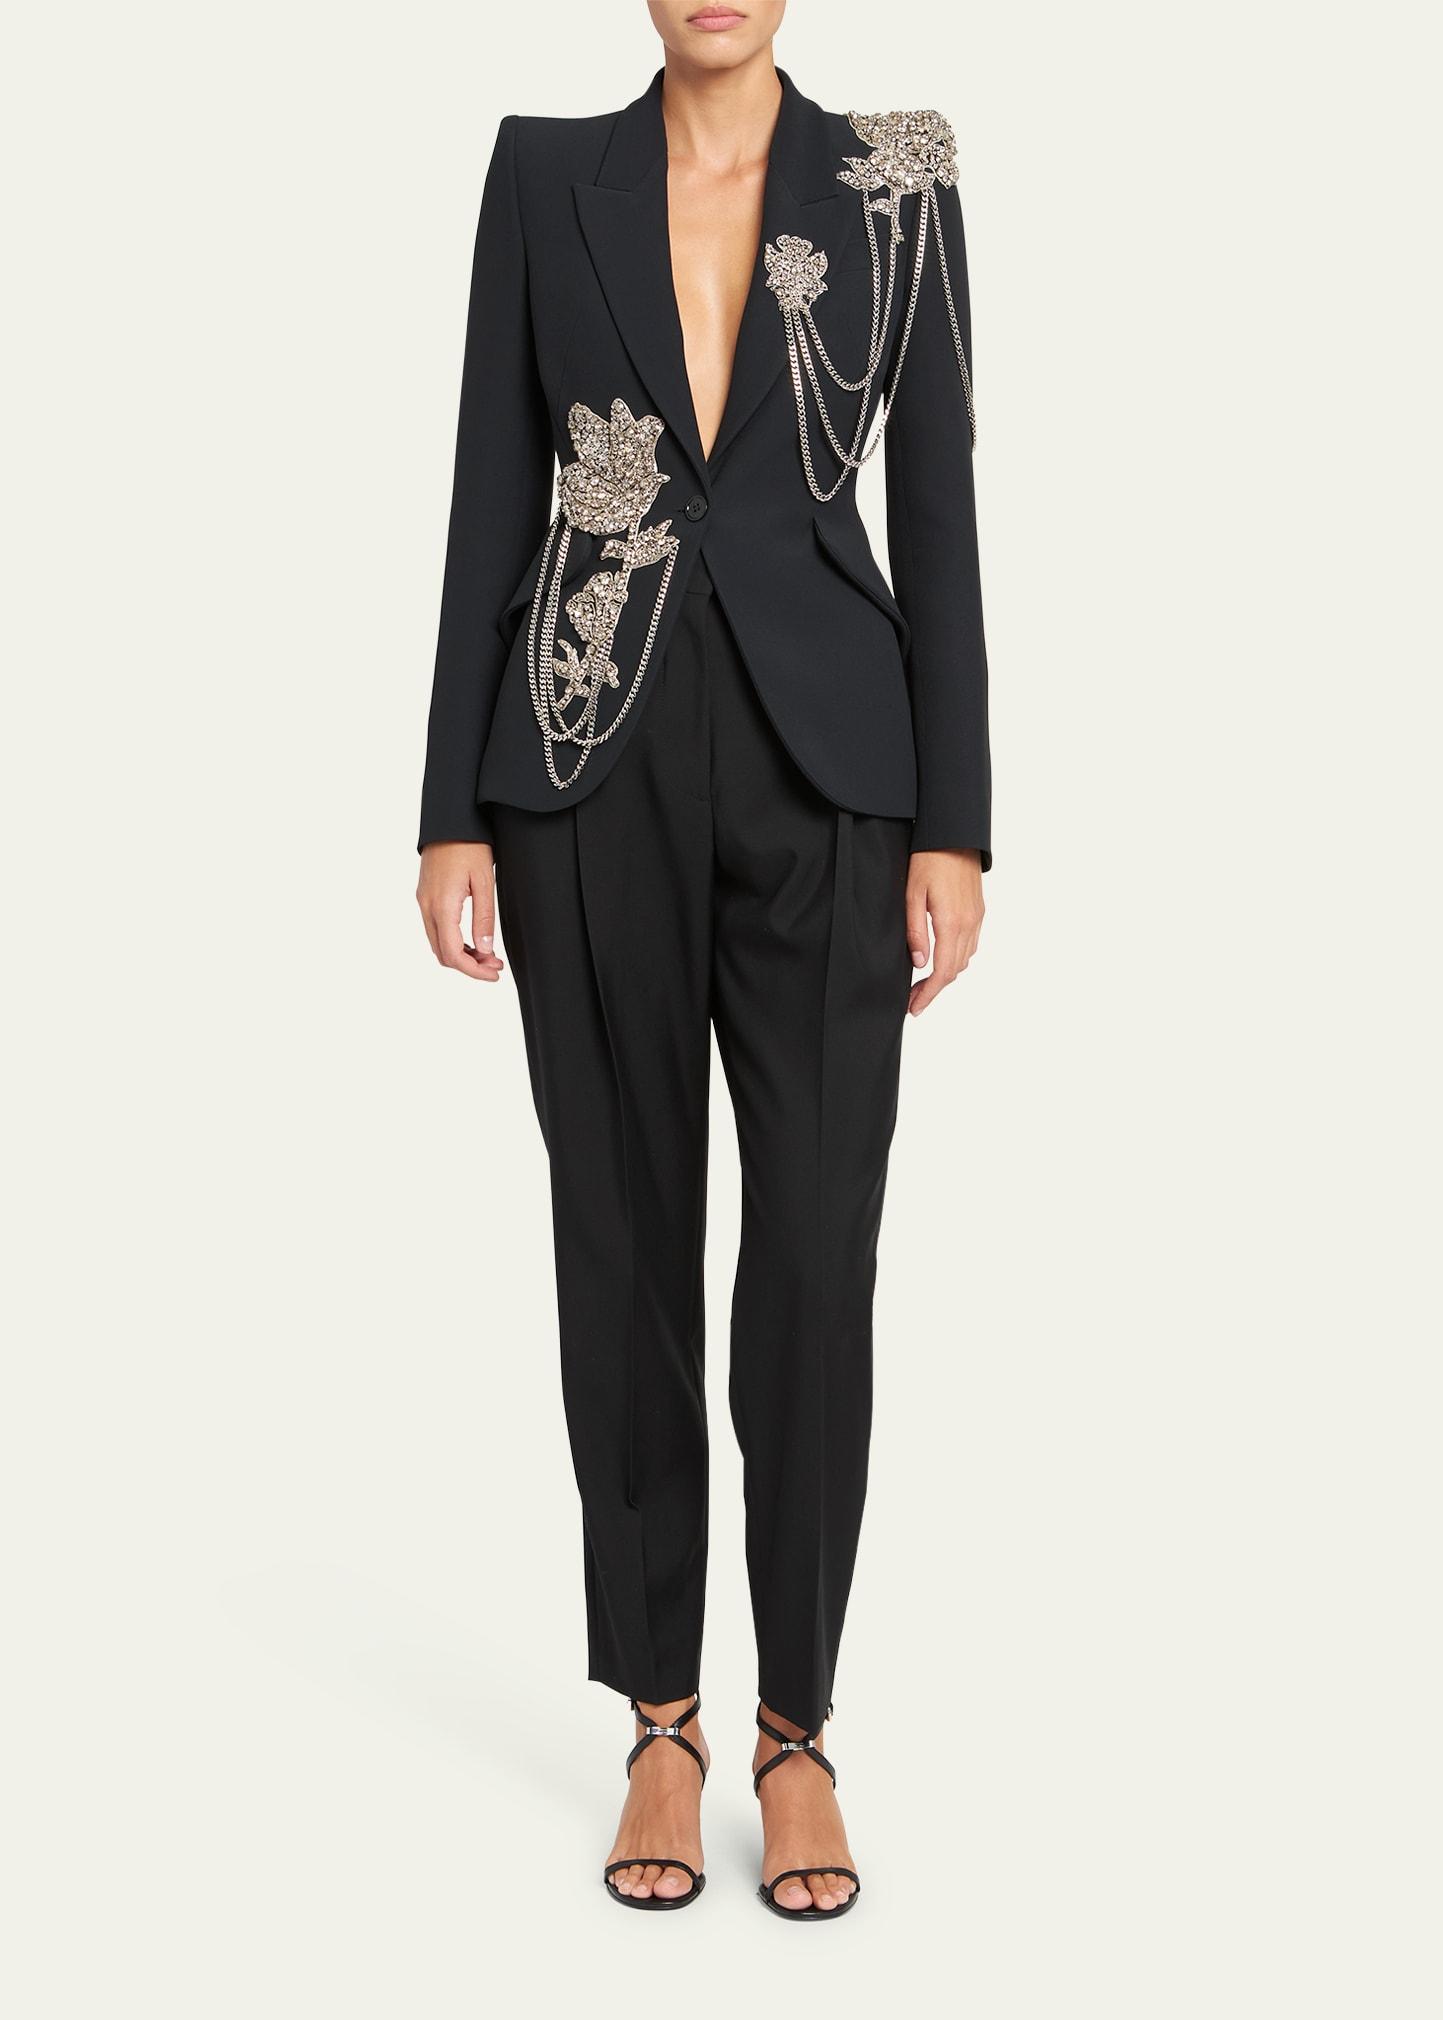 Alexander McQueen Peak Shlouder Blazer Jacket With Floral Crystal Chain  Detail in Black | Lyst